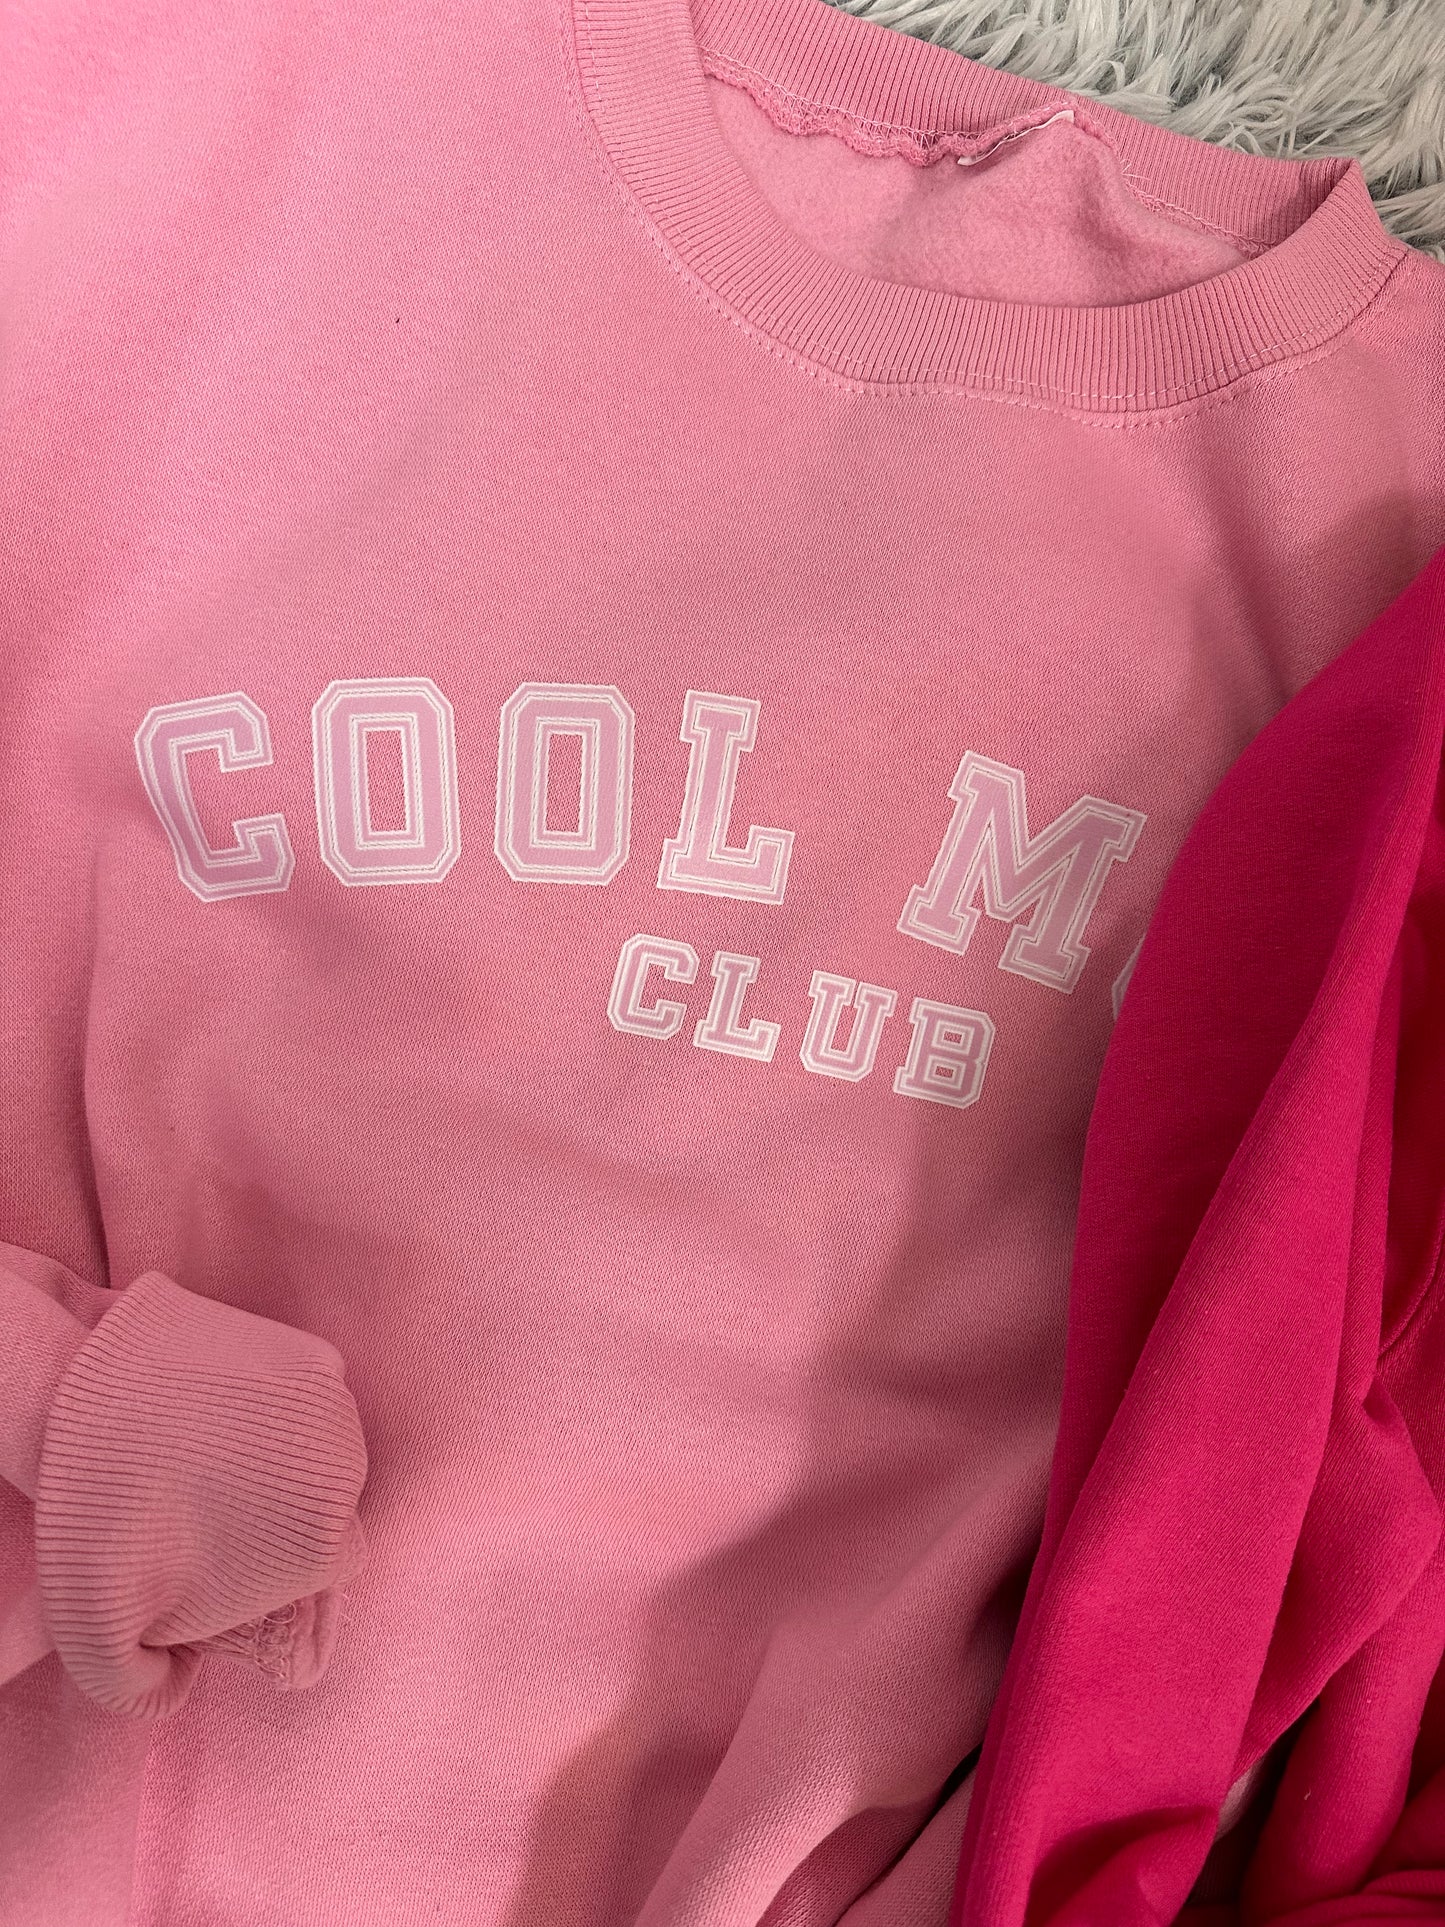 COOL MOM Club Crewneck (Pink)